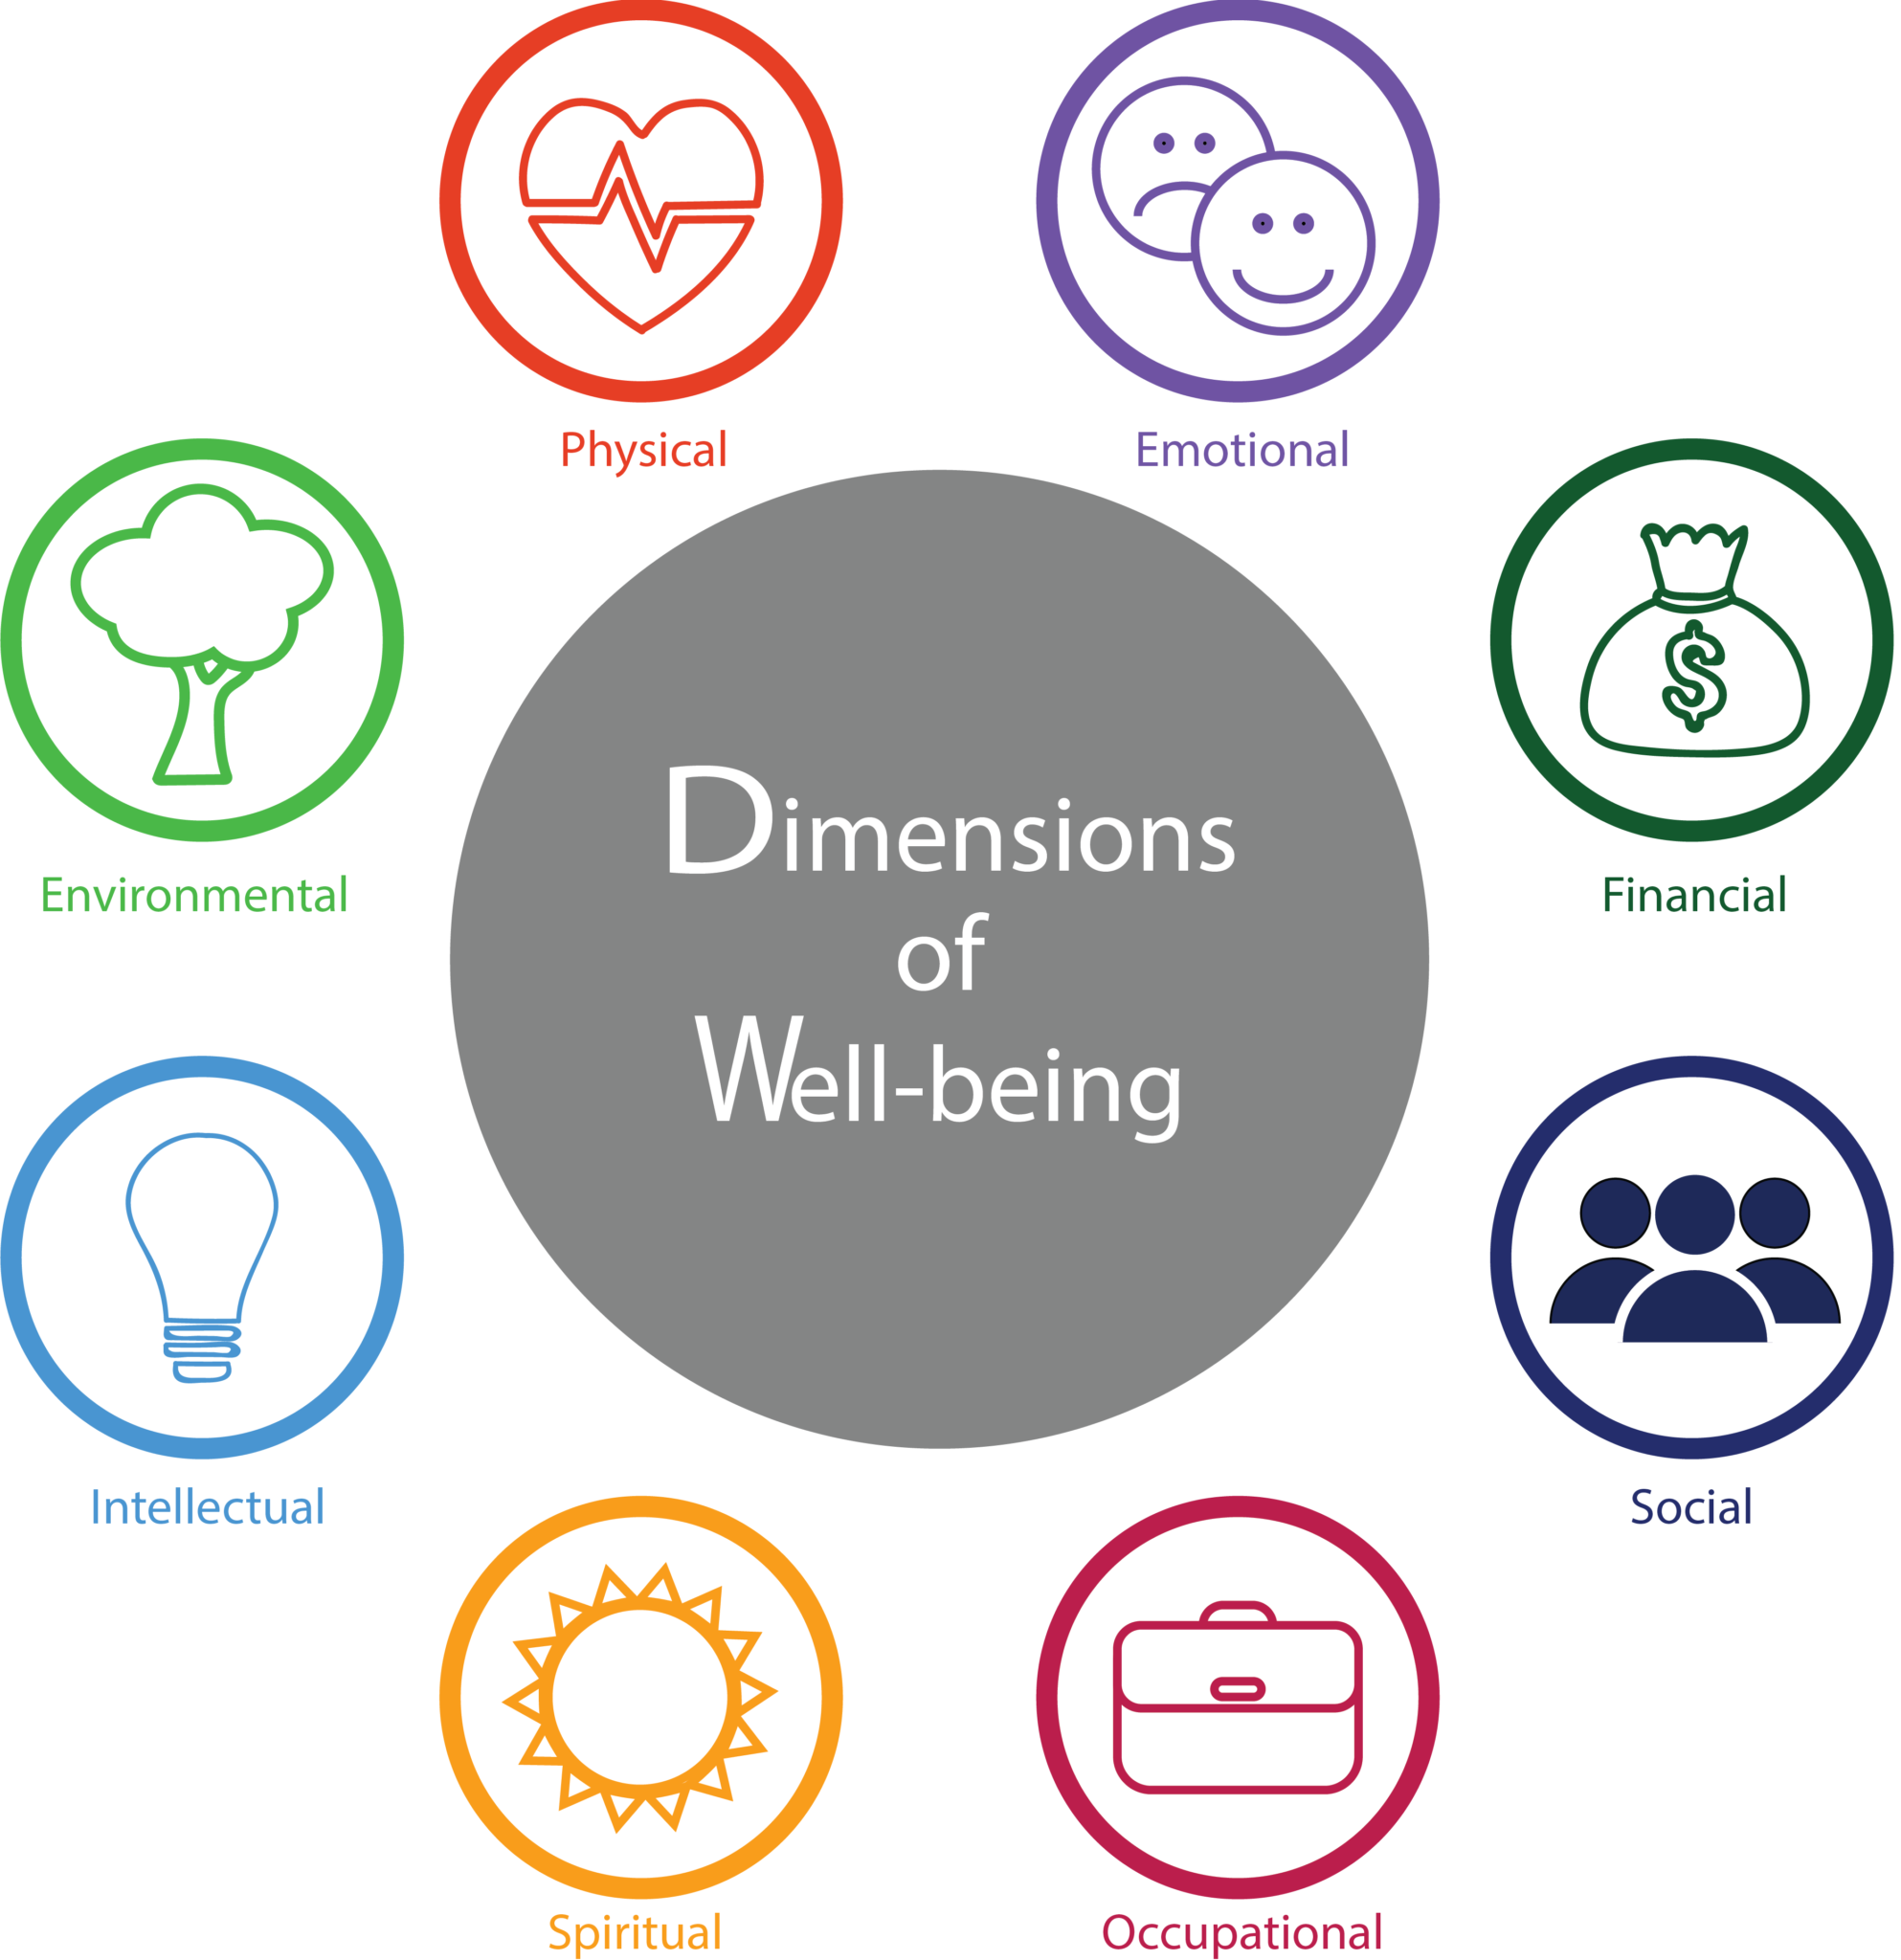 To keep there well being. Well-being в организации. Well being программы. Концепция well being. Wellbeing-программы что это.